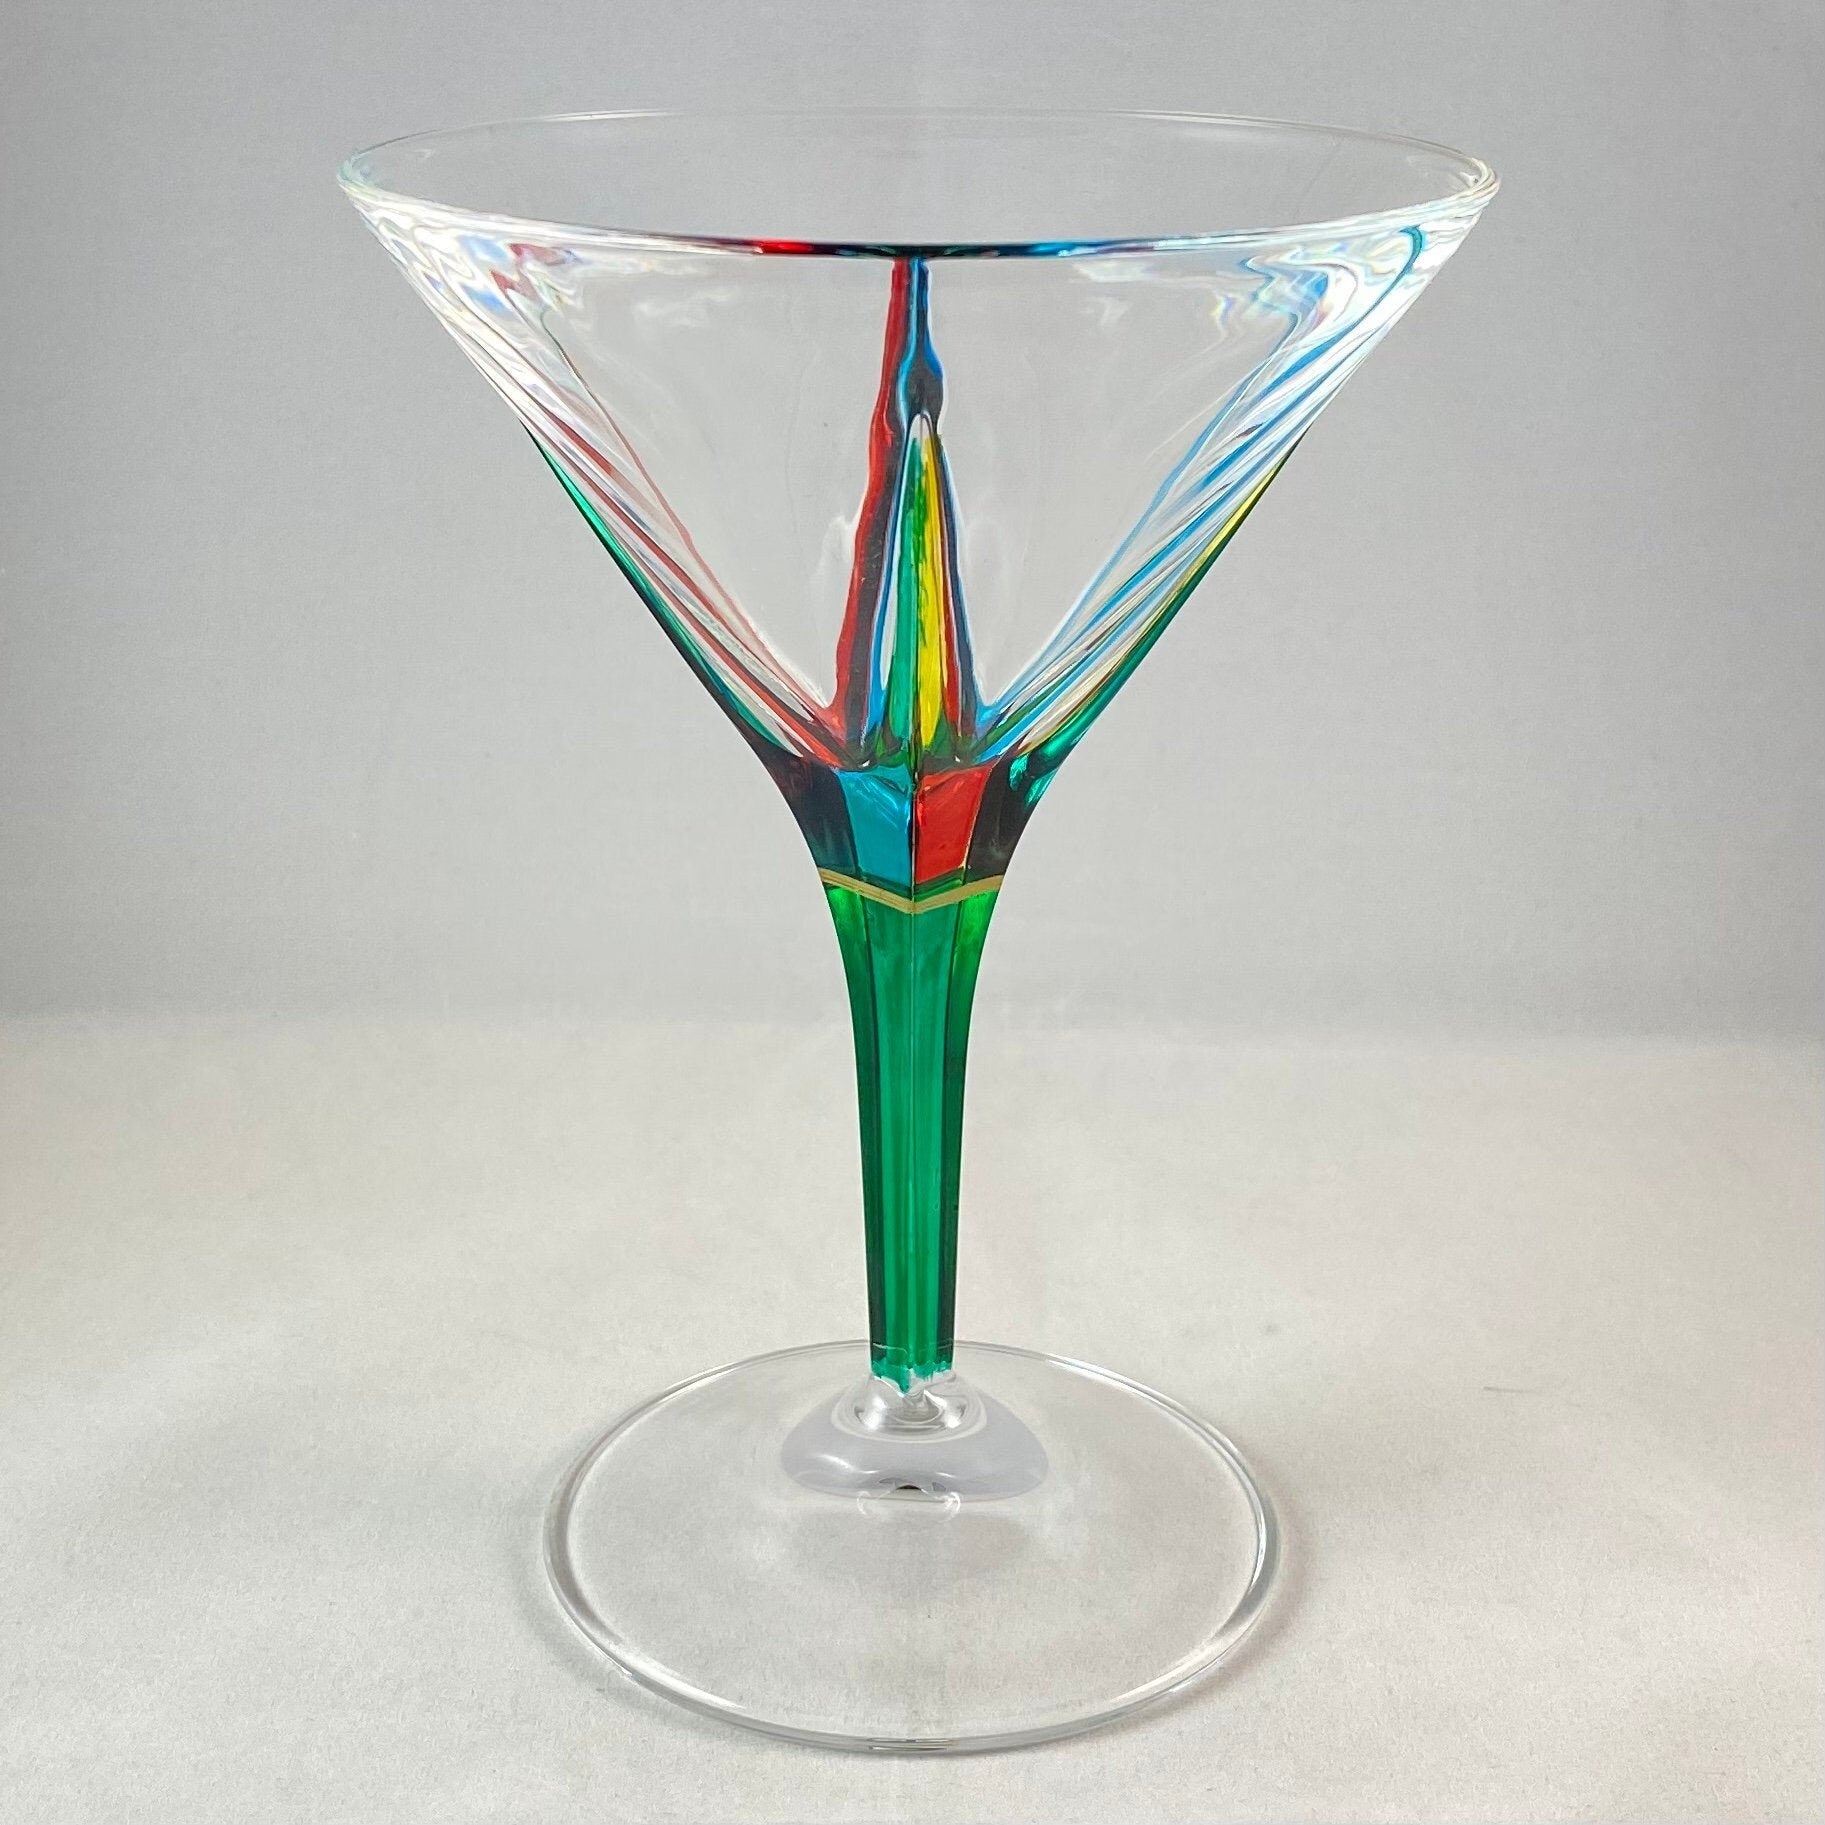 Green Stem Fusion Venetian Glass Martini Glass - Handmade in Italy, Colorful Murano Glass